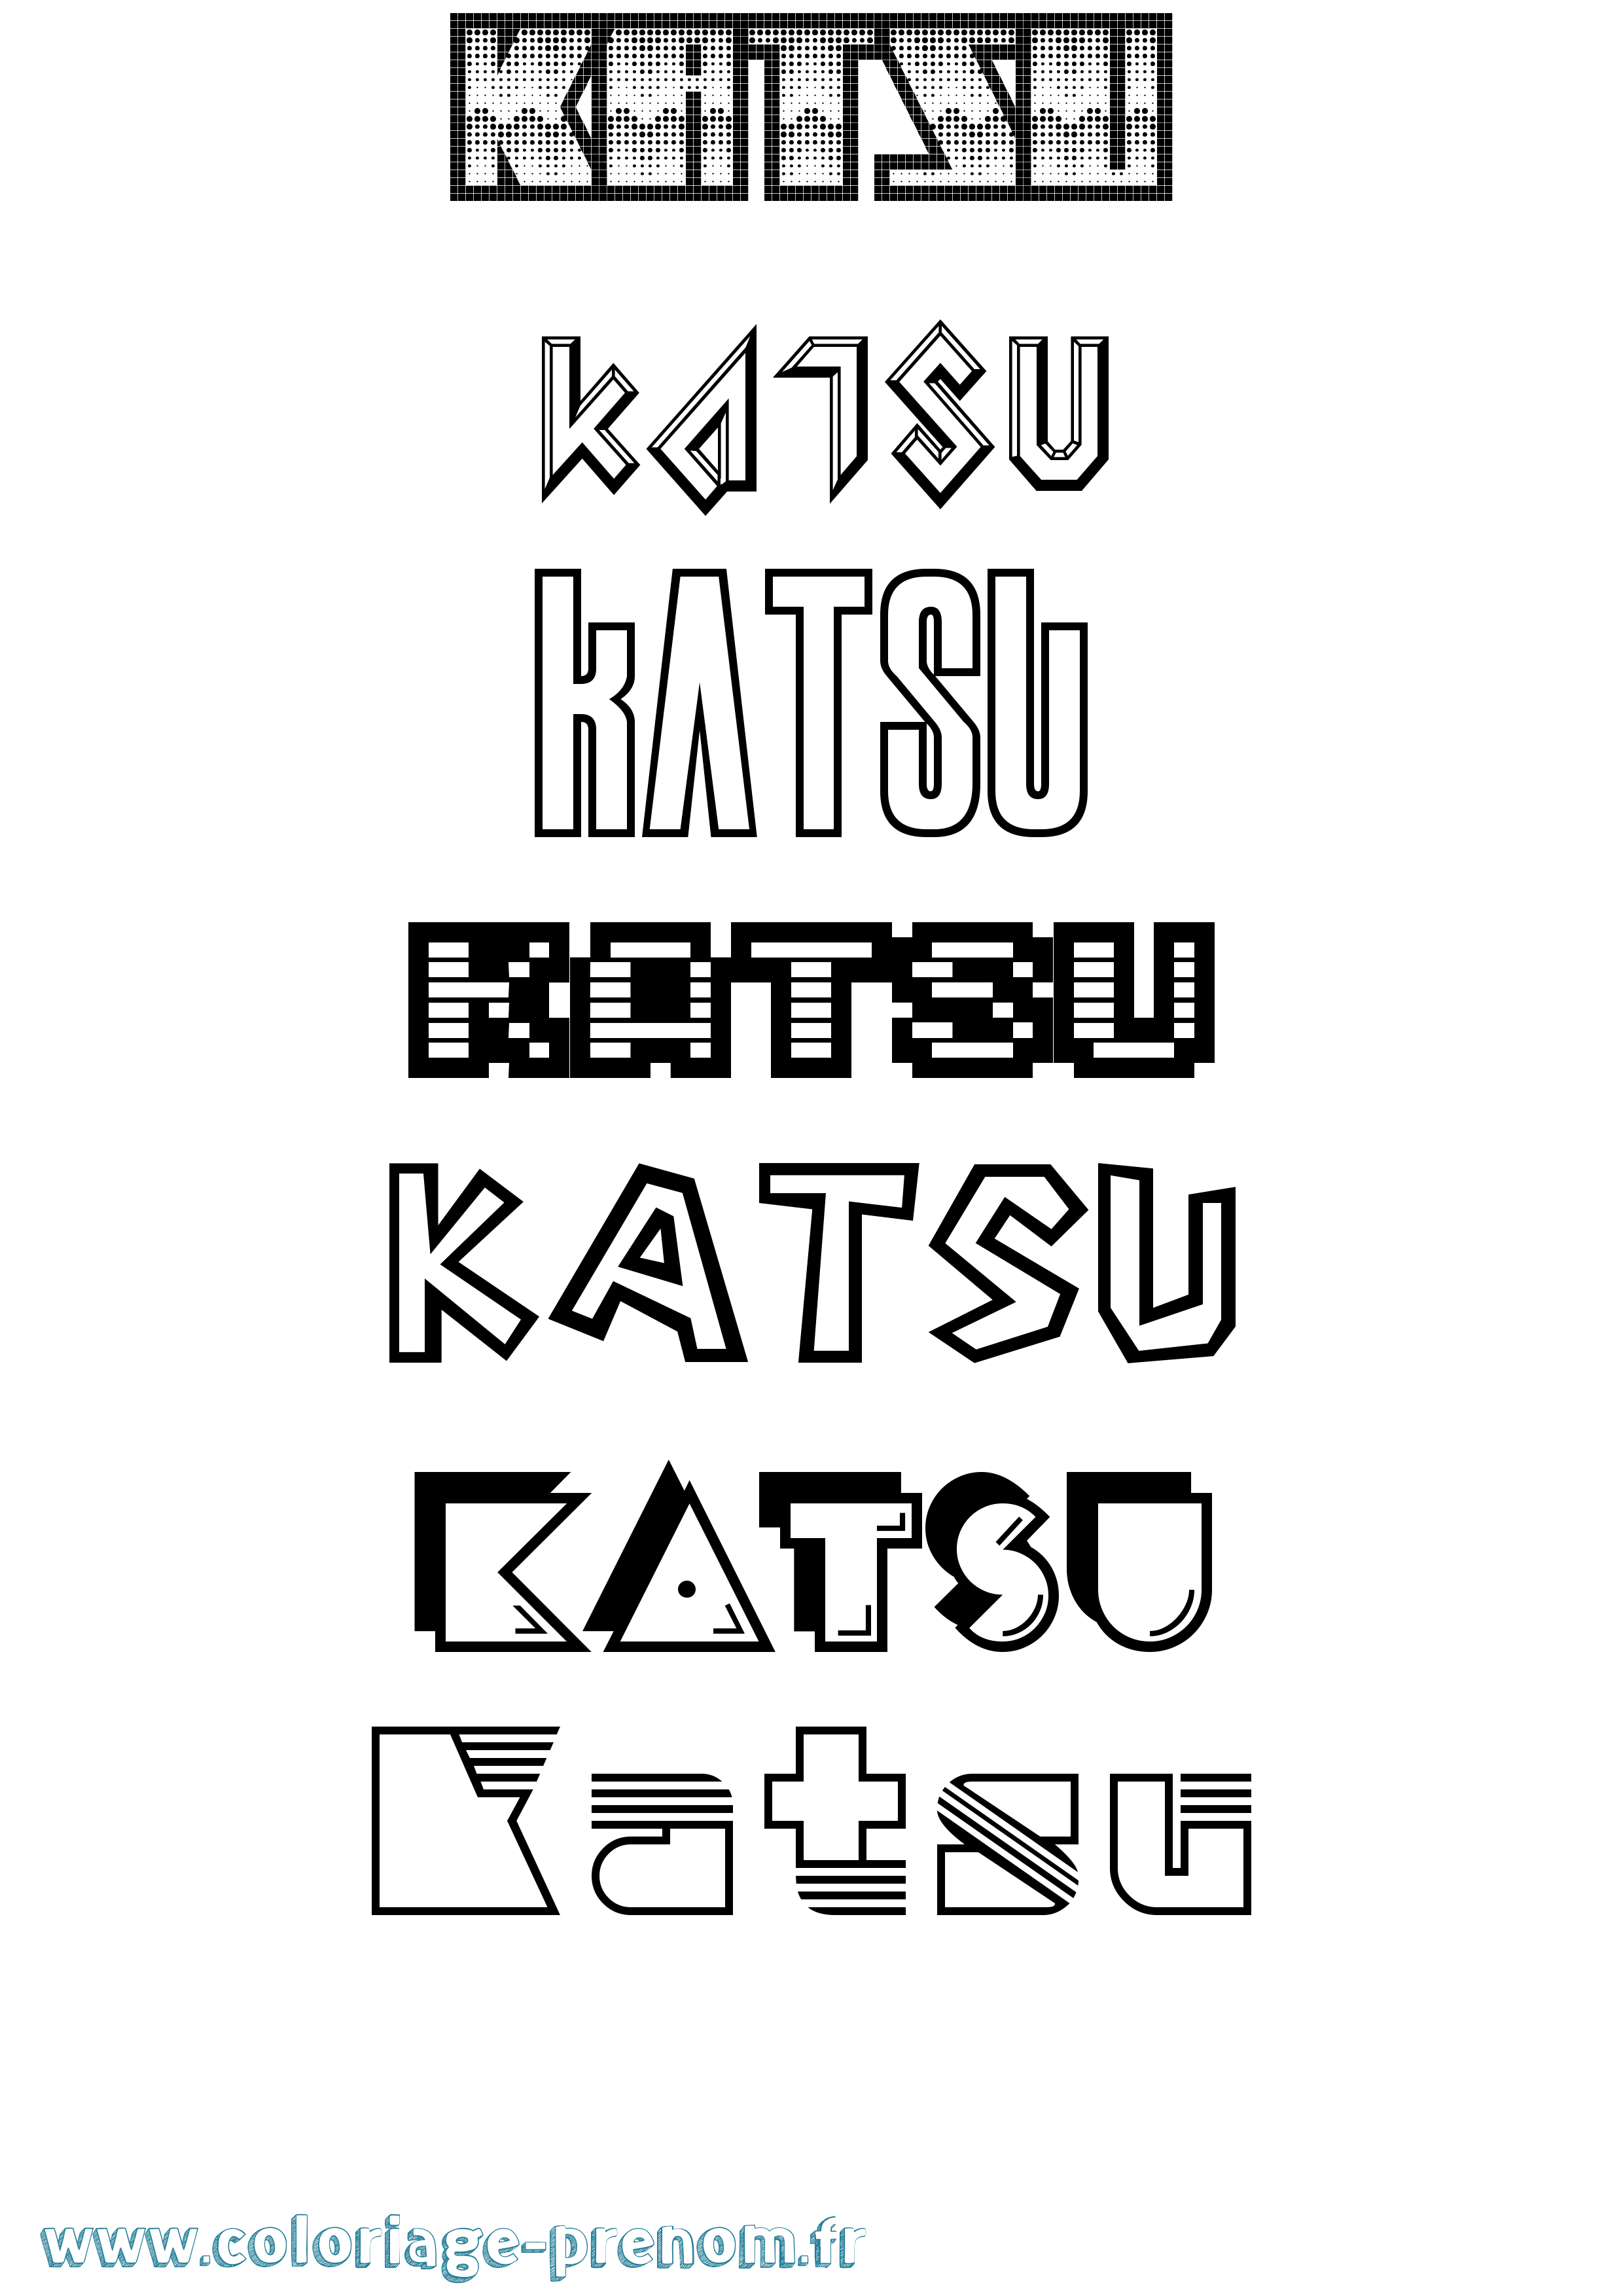 Coloriage prénom Katsu Jeux Vidéos